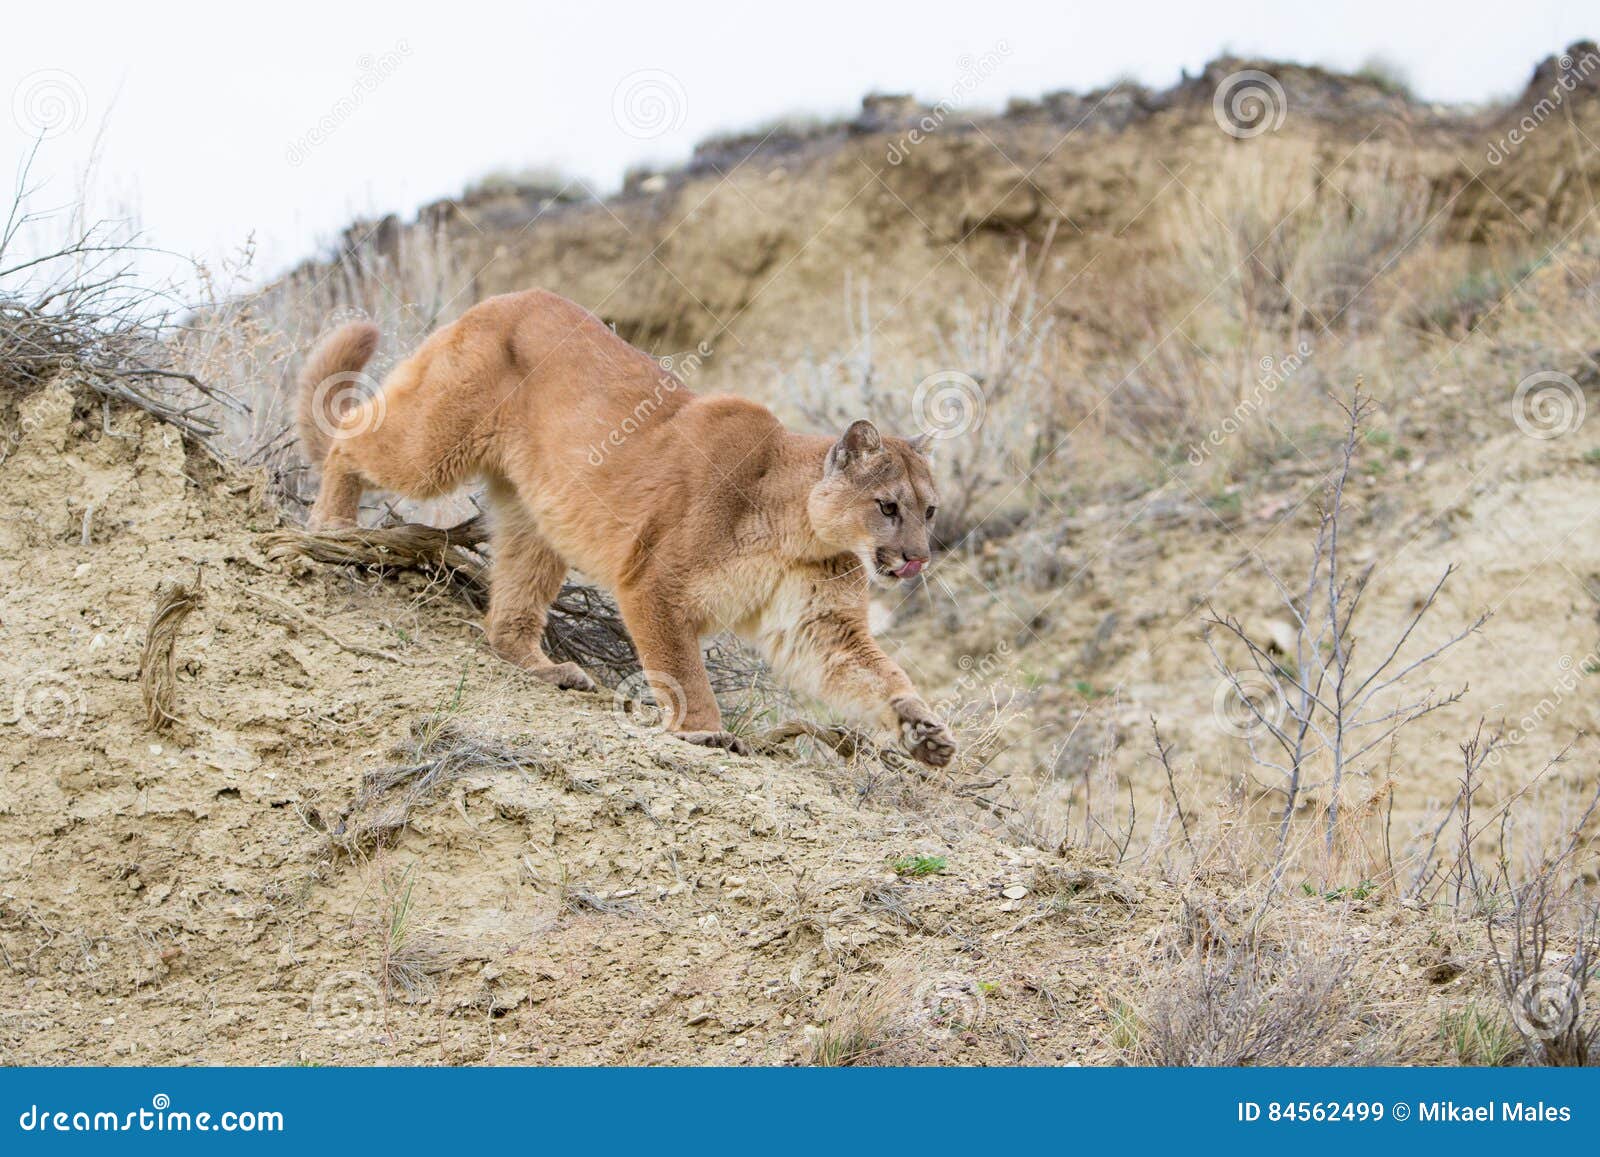 mountain lion stalking on prey in canyon